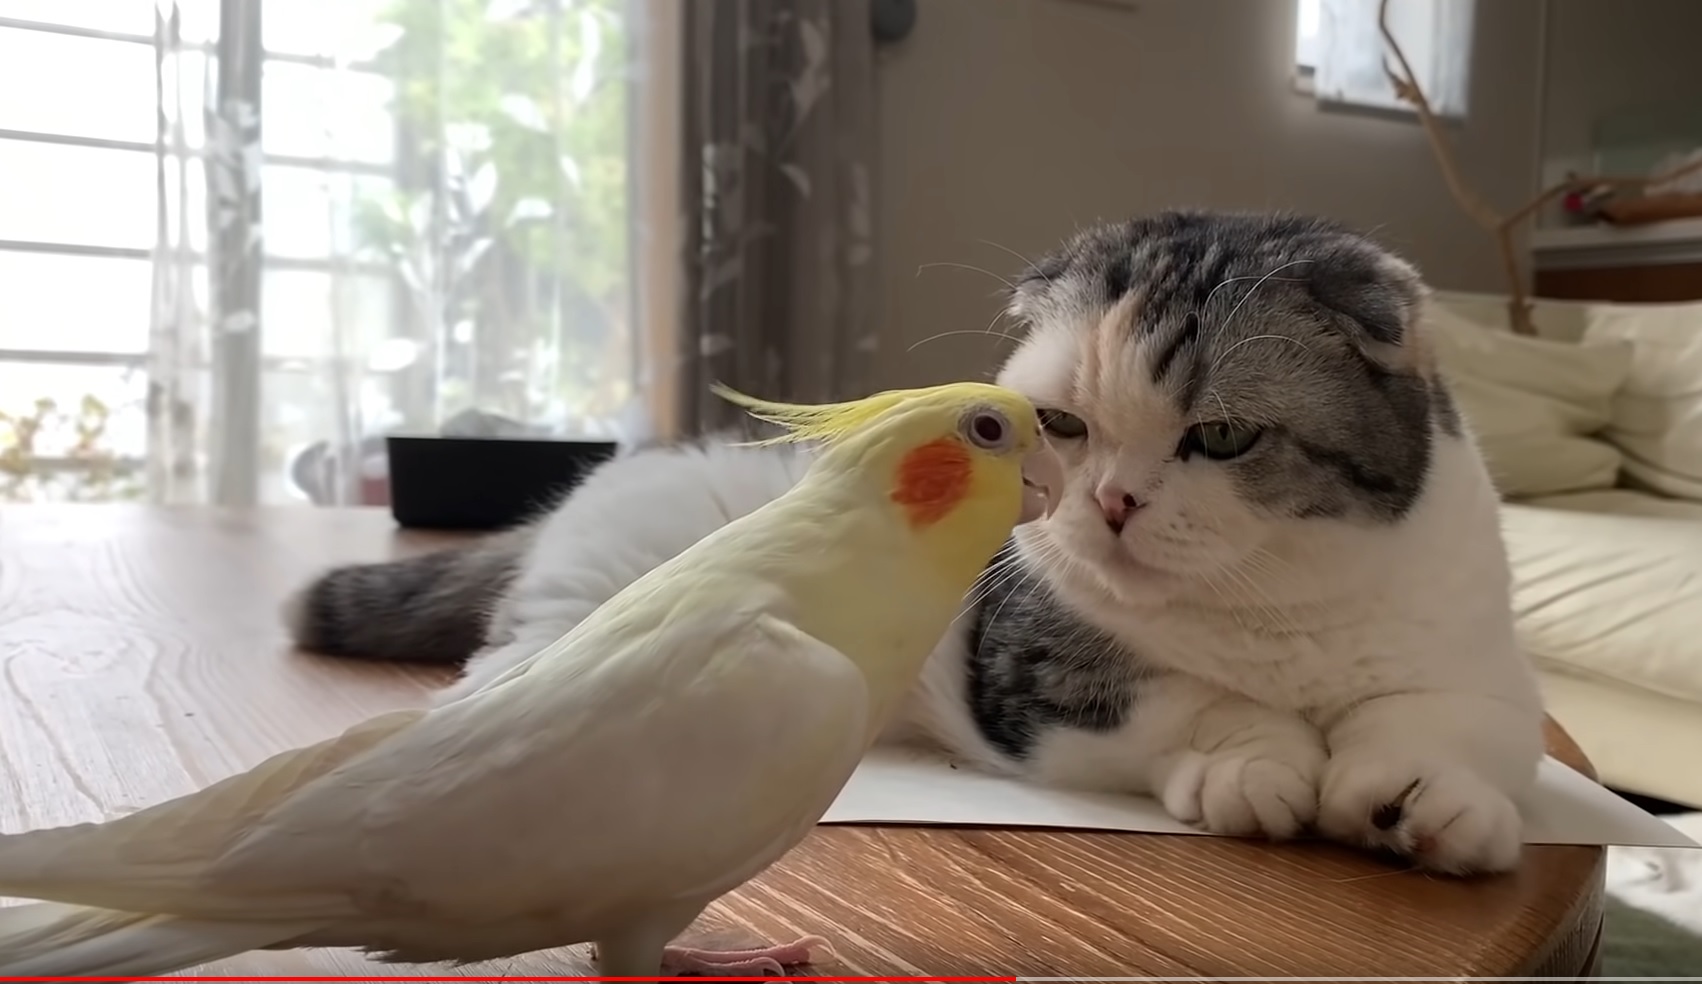 Cockatiel singing song to cat